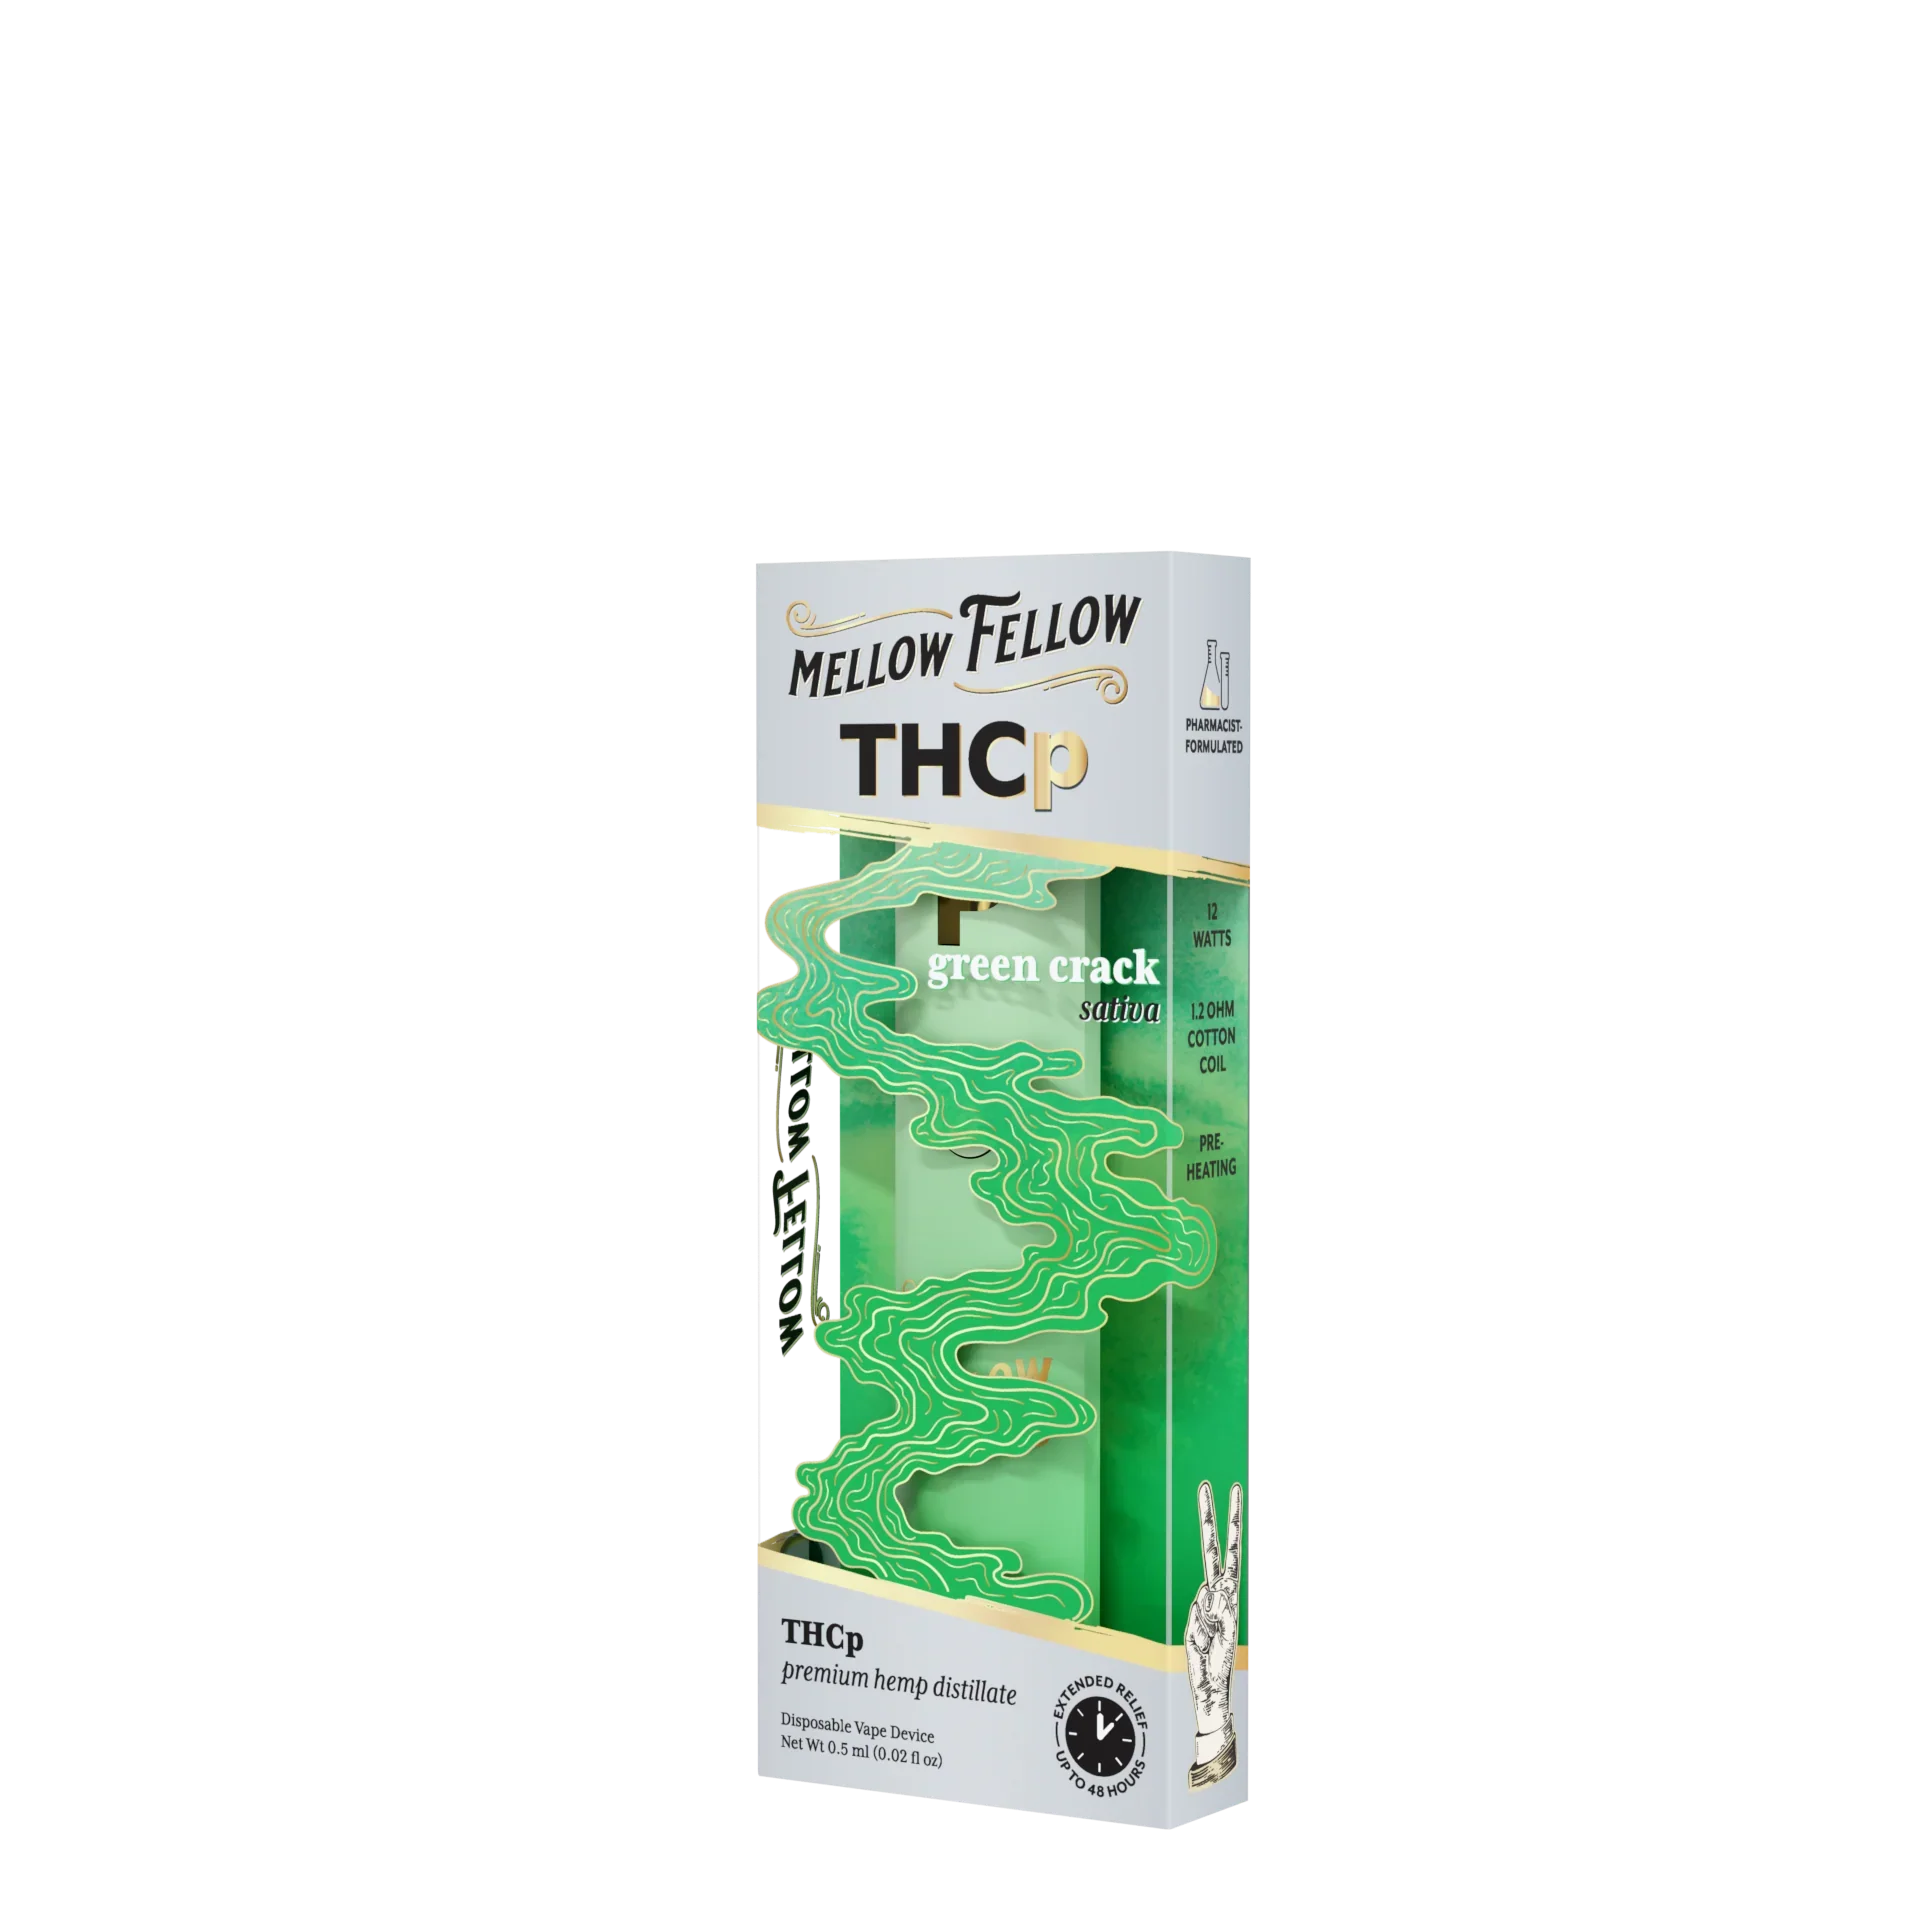 Mellow Fellow THCp 0.5g Disposable Vape - Green Crack (Sativa) Best Price